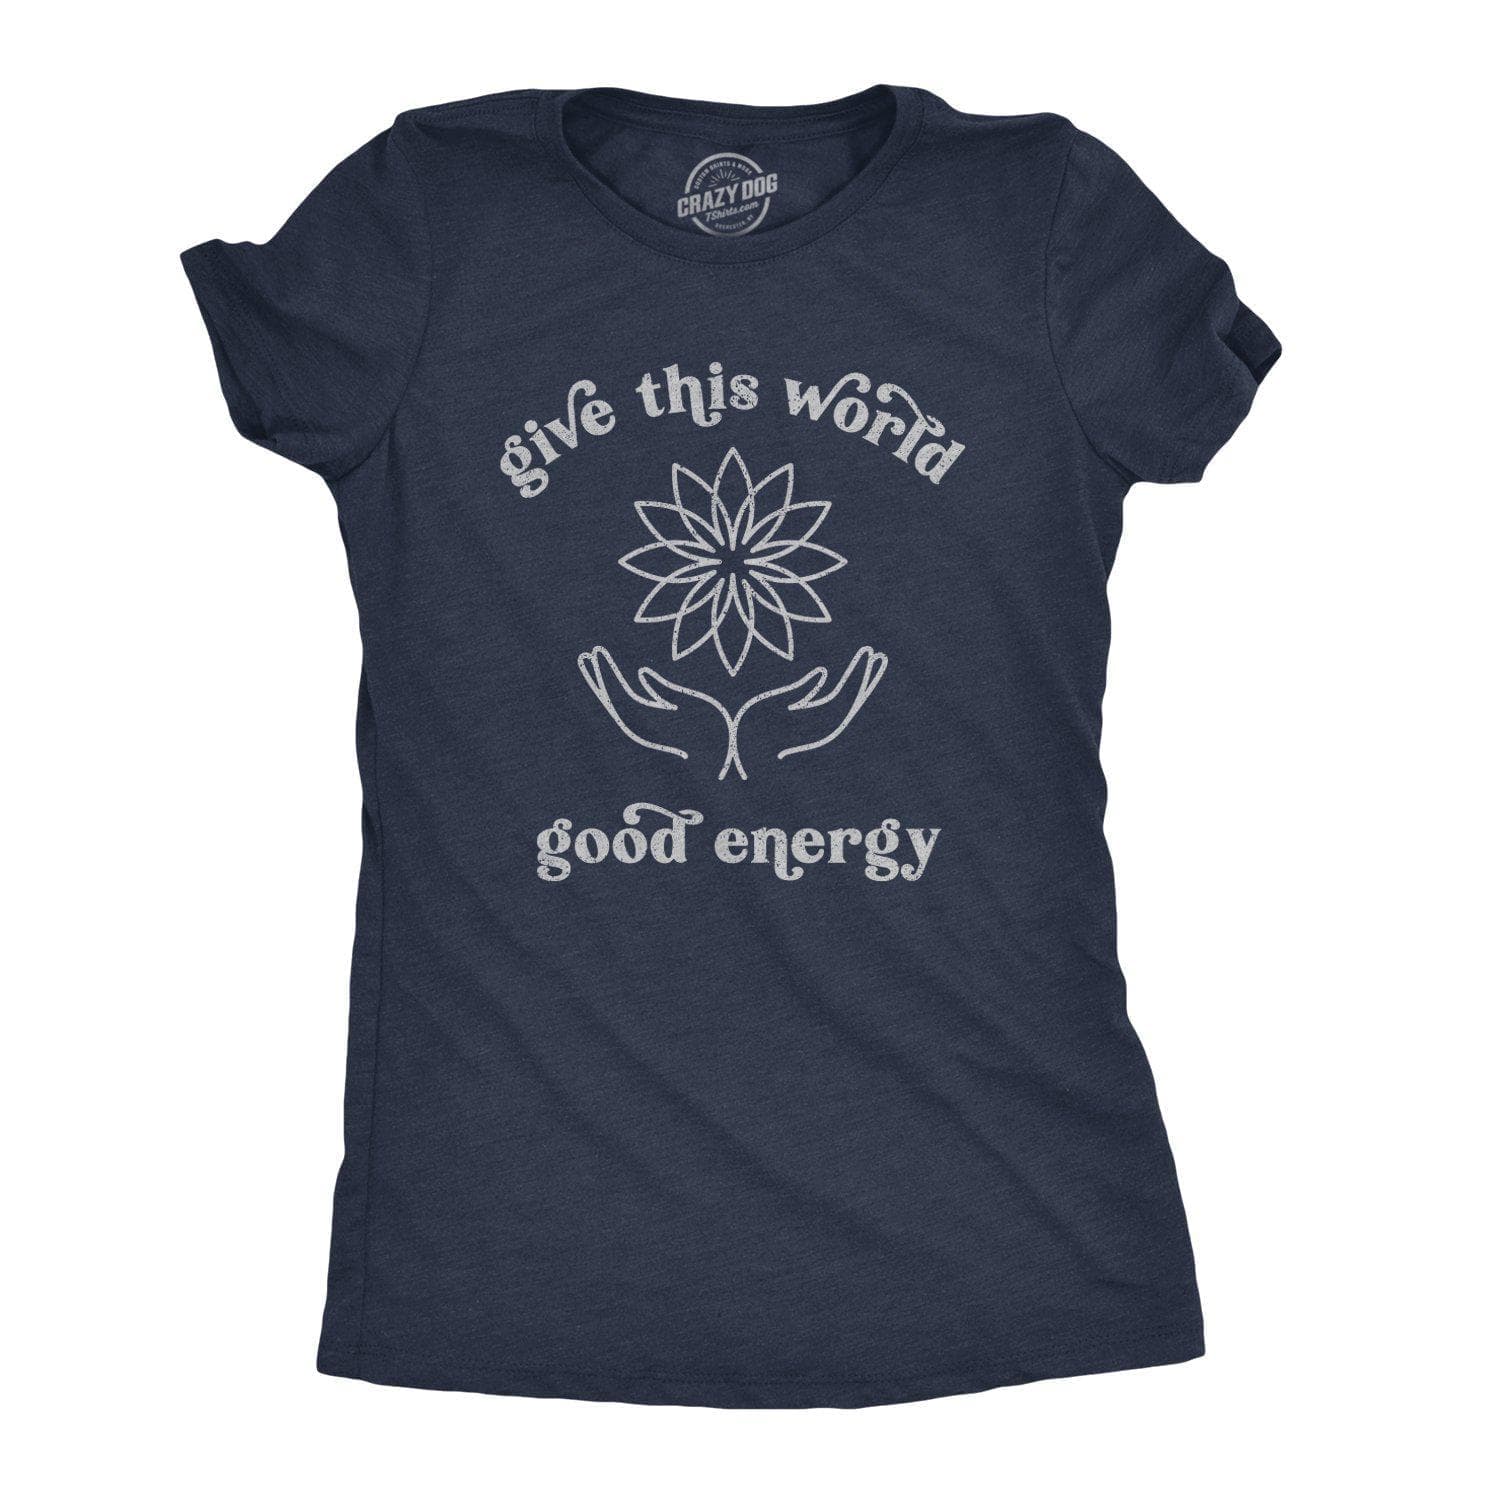 Give The World Good Energy Women's Tshirt - Crazy Dog T-Shirts